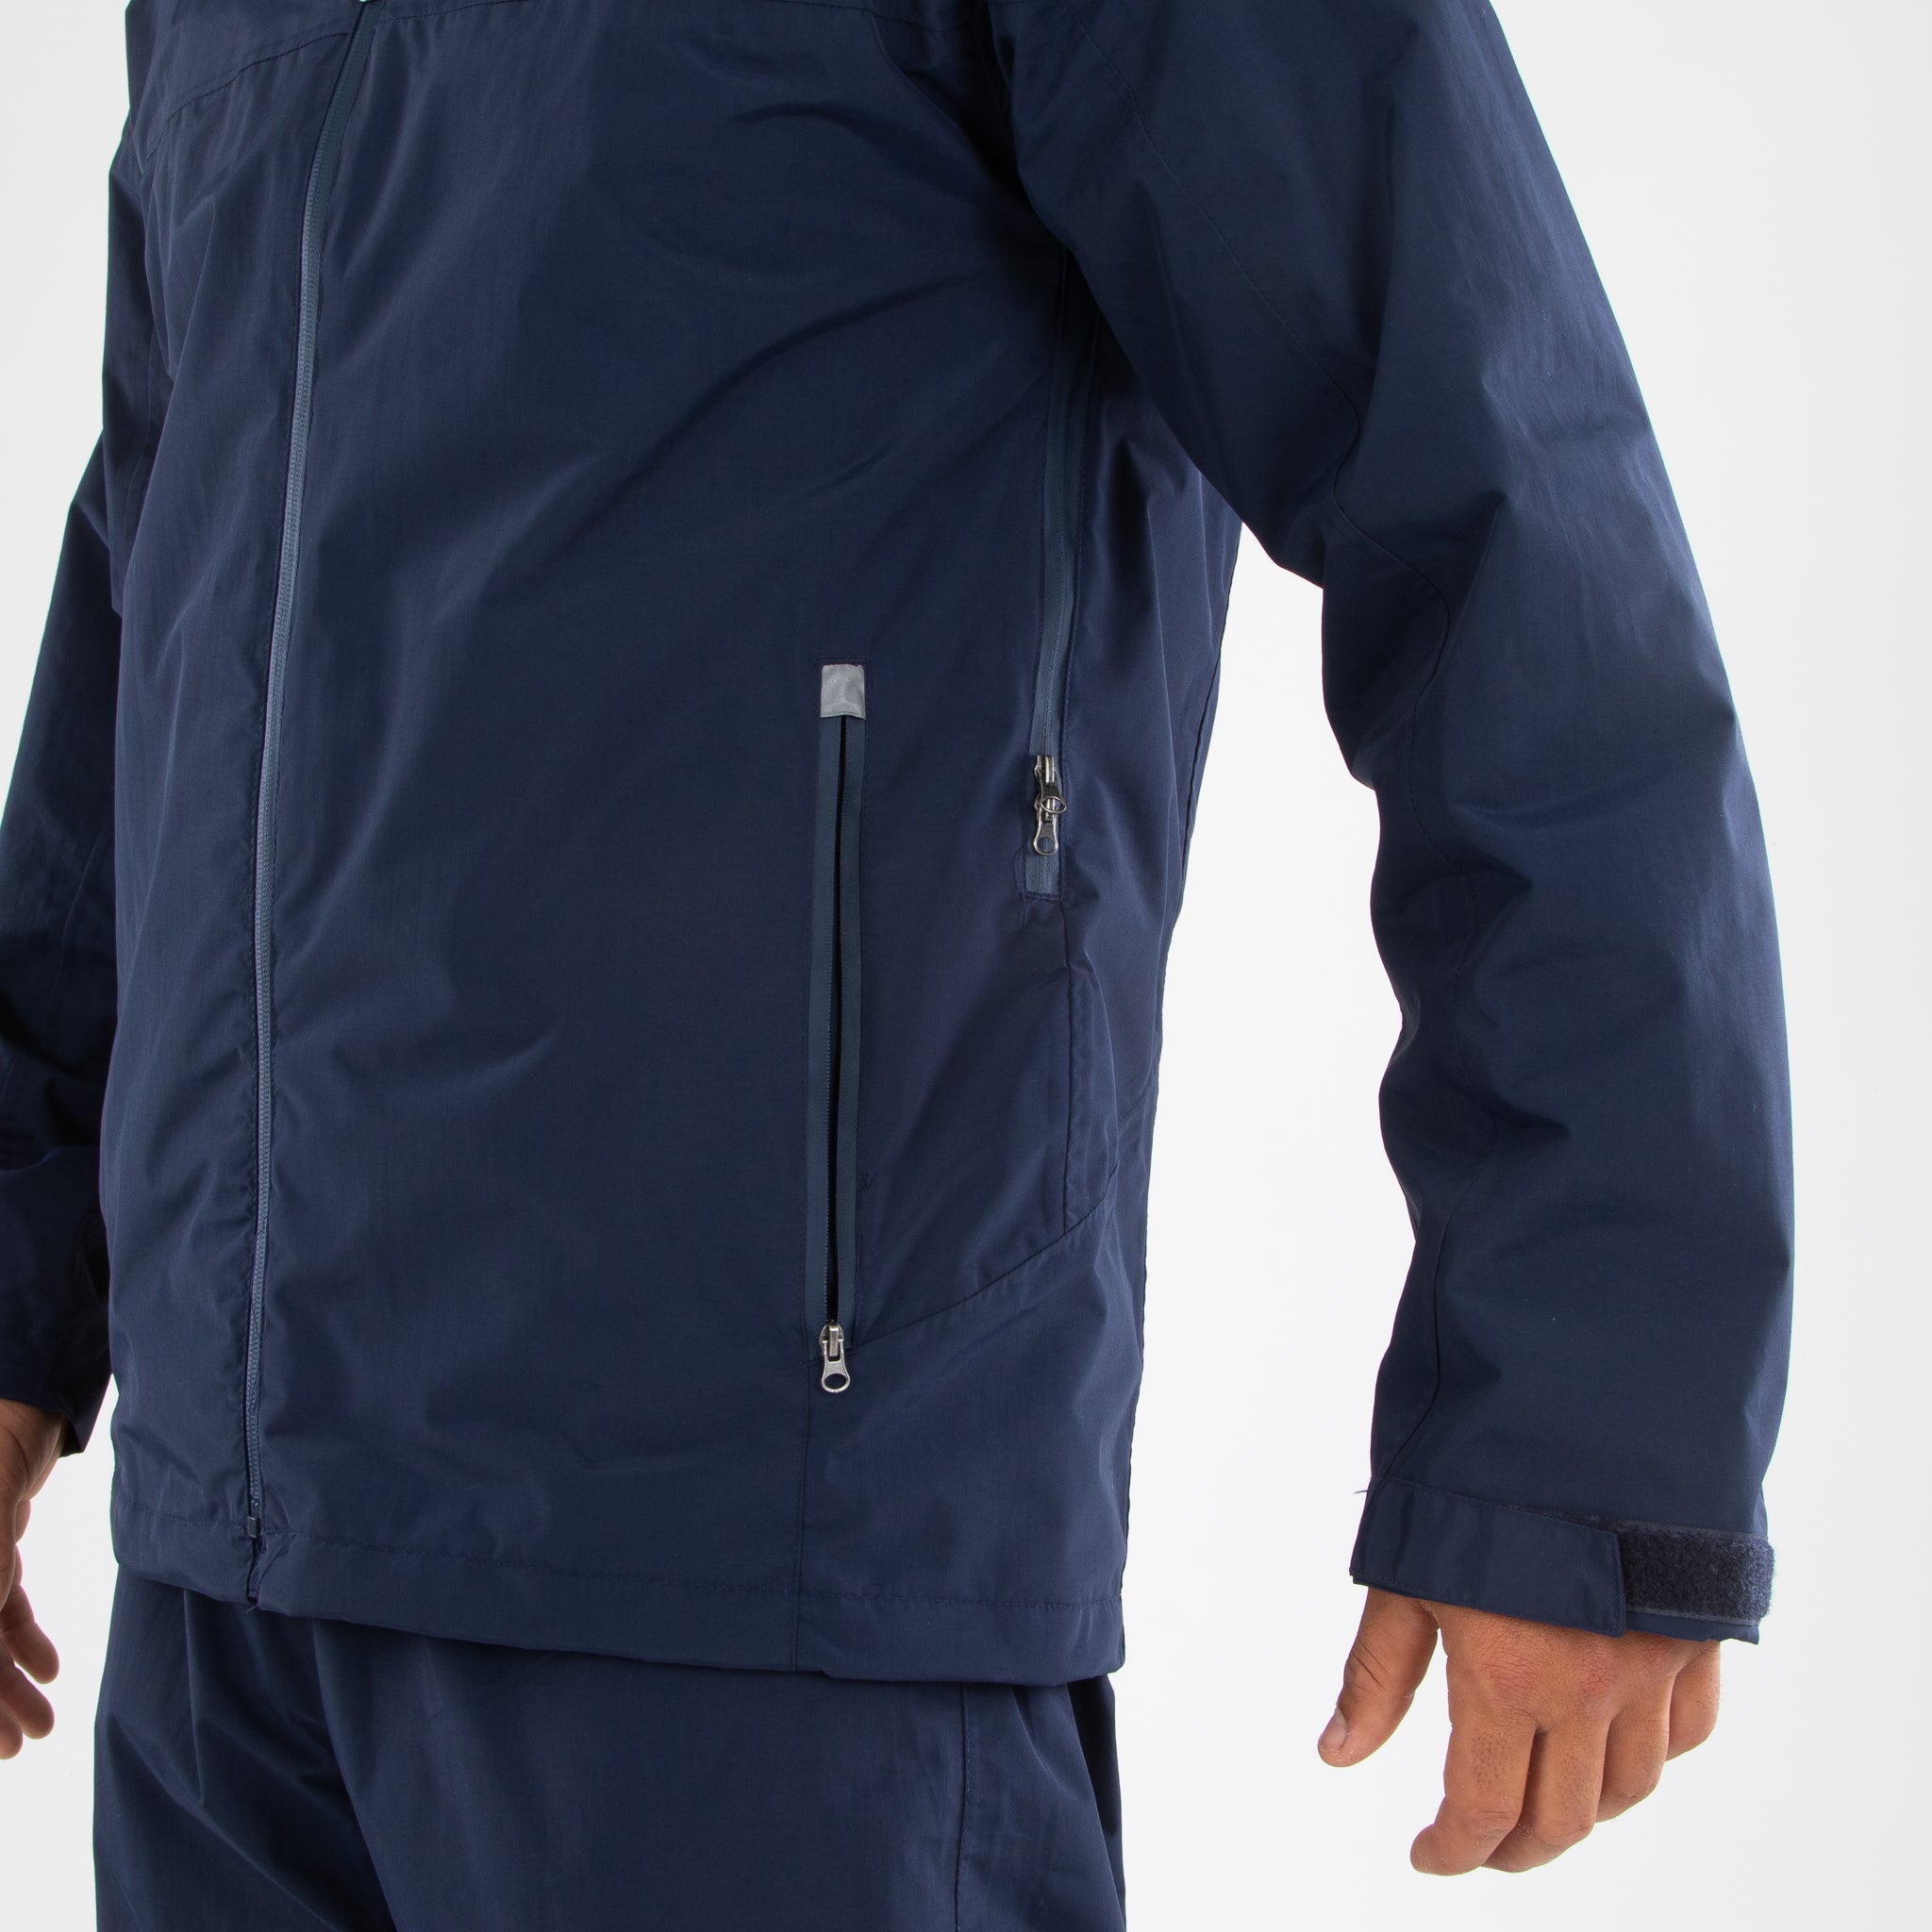 VX3 Protego Waterproof Jacket Navy Side Pockets